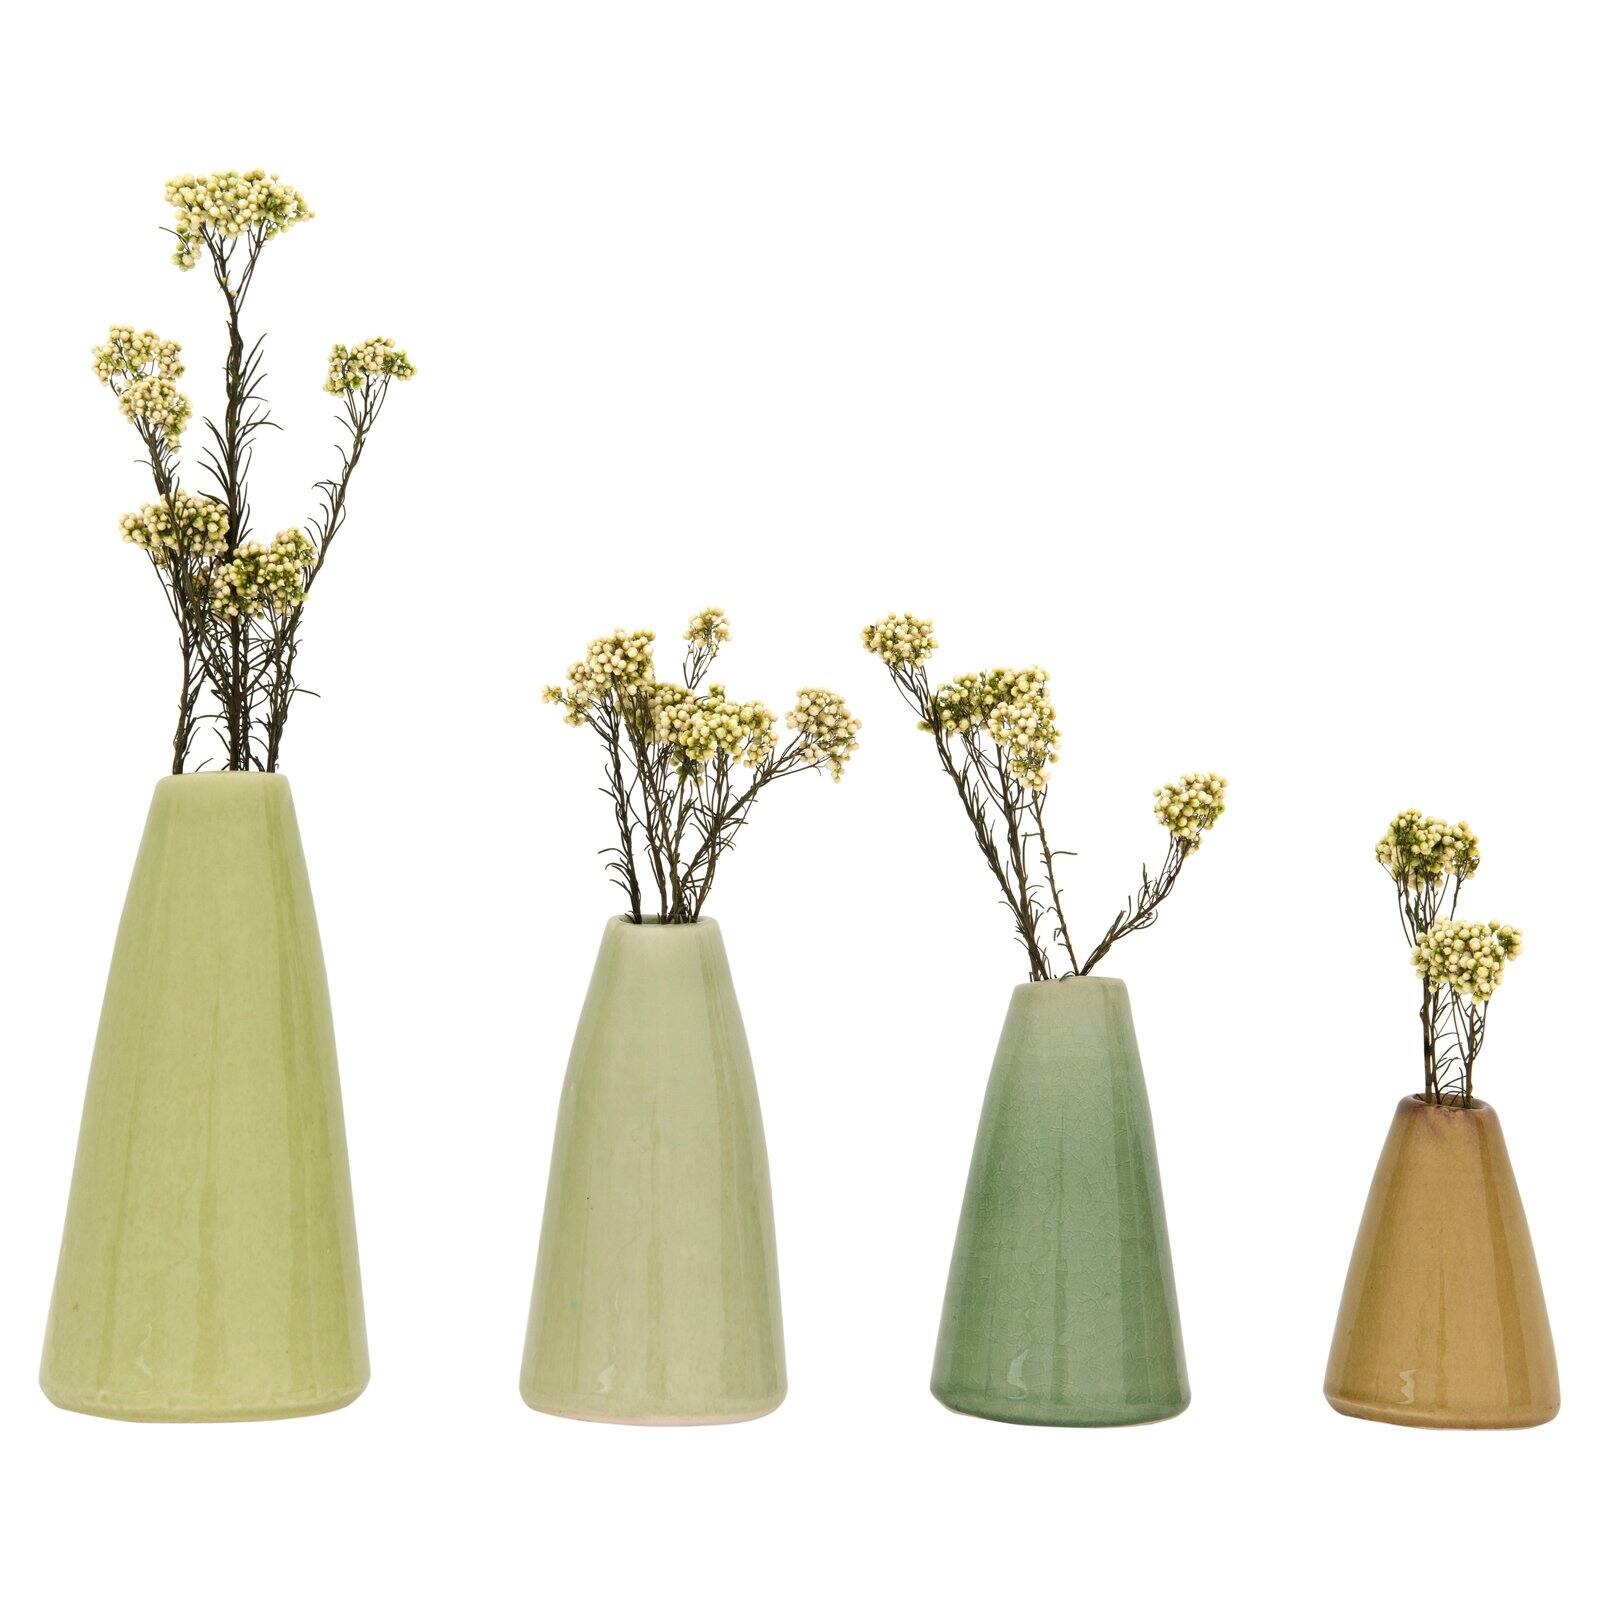 Pistachio Green Terracotta Vases (Set of 4 Sizes) - Image 2